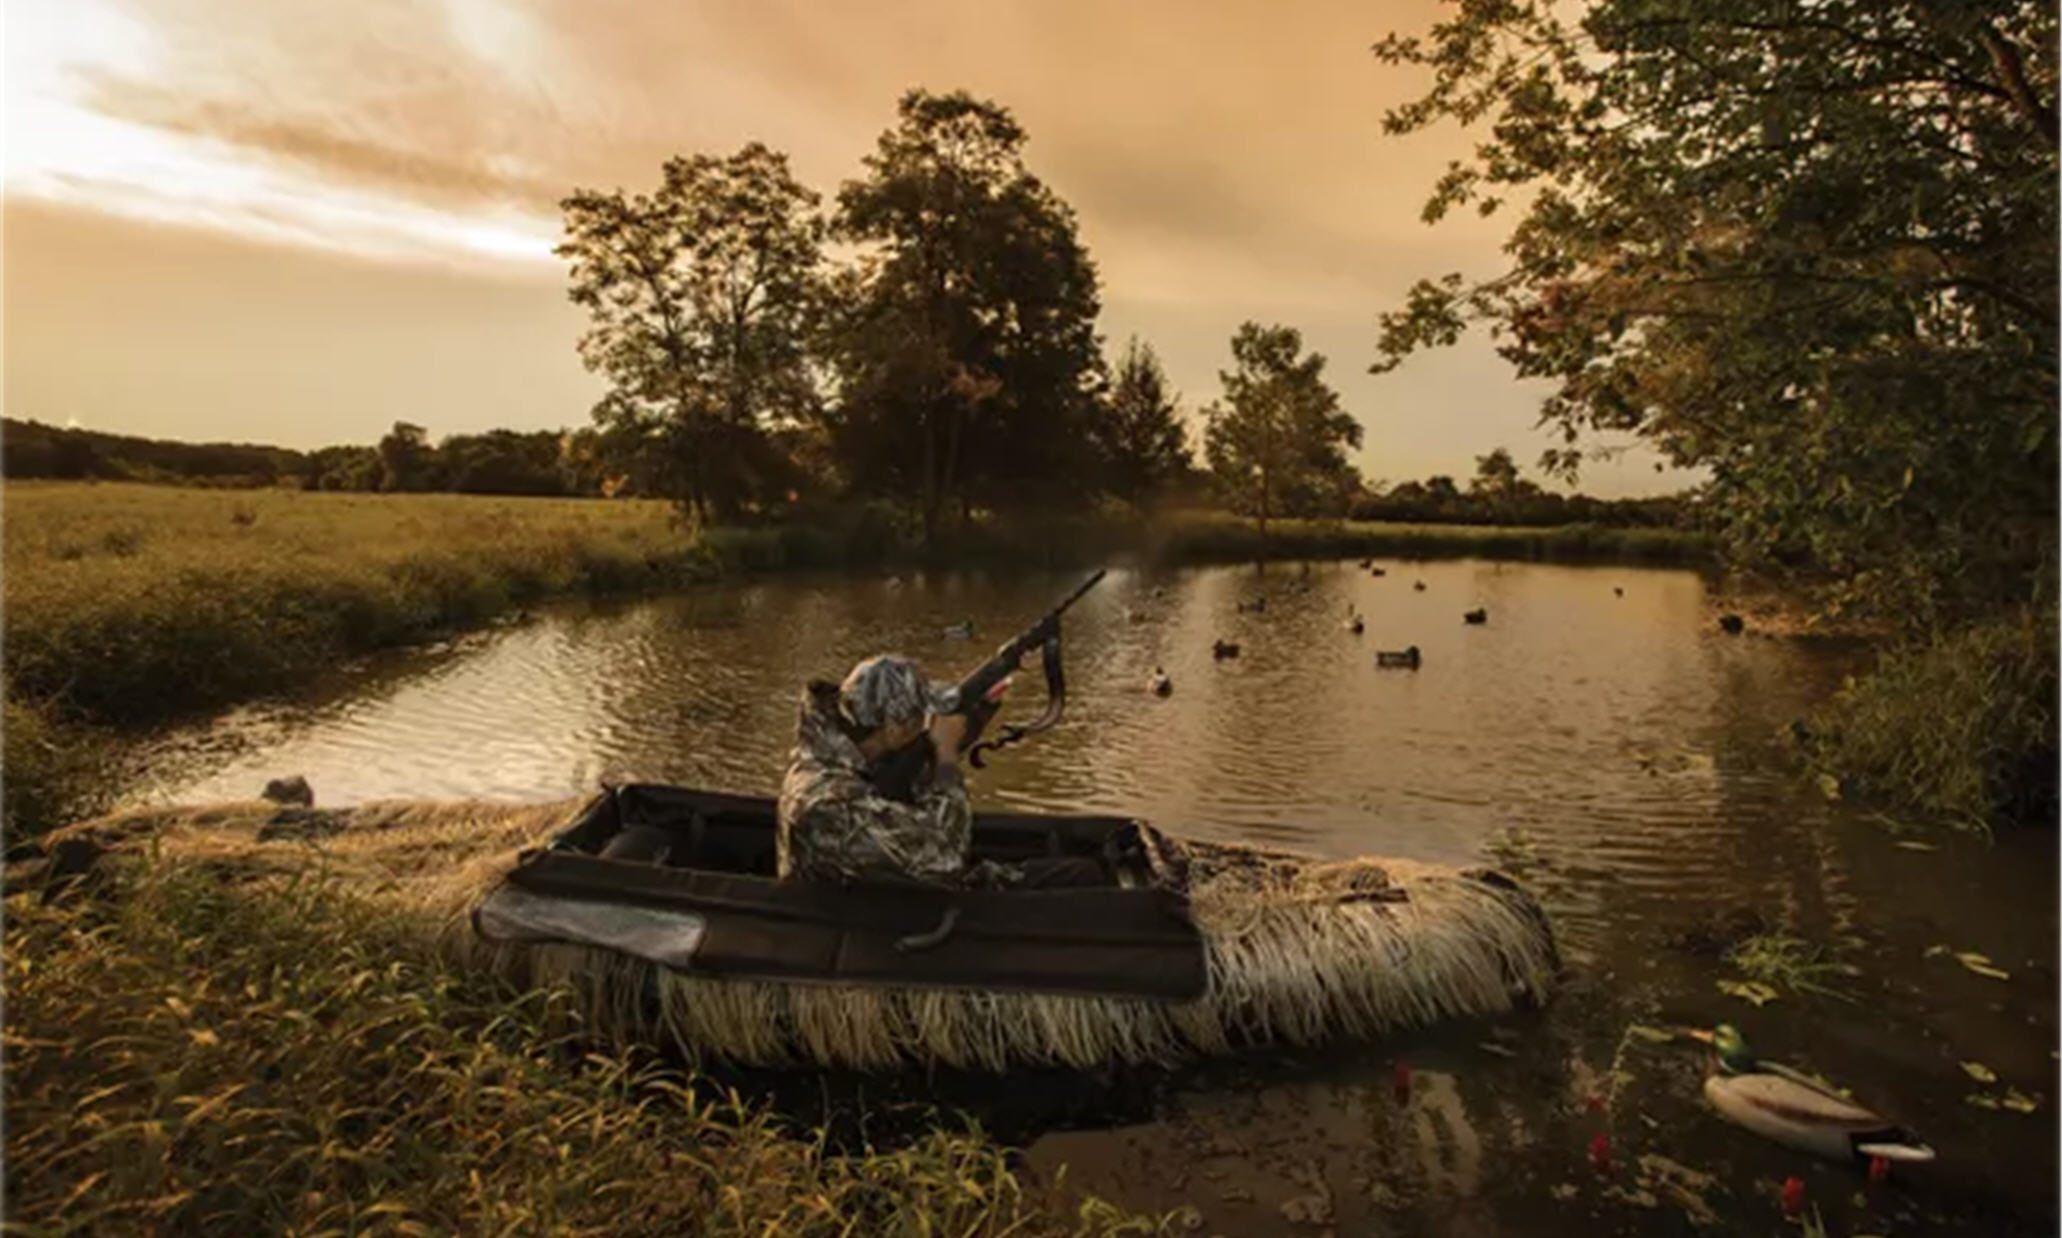 Duck Hunting Kayak Setup: Kayak Duck Blind